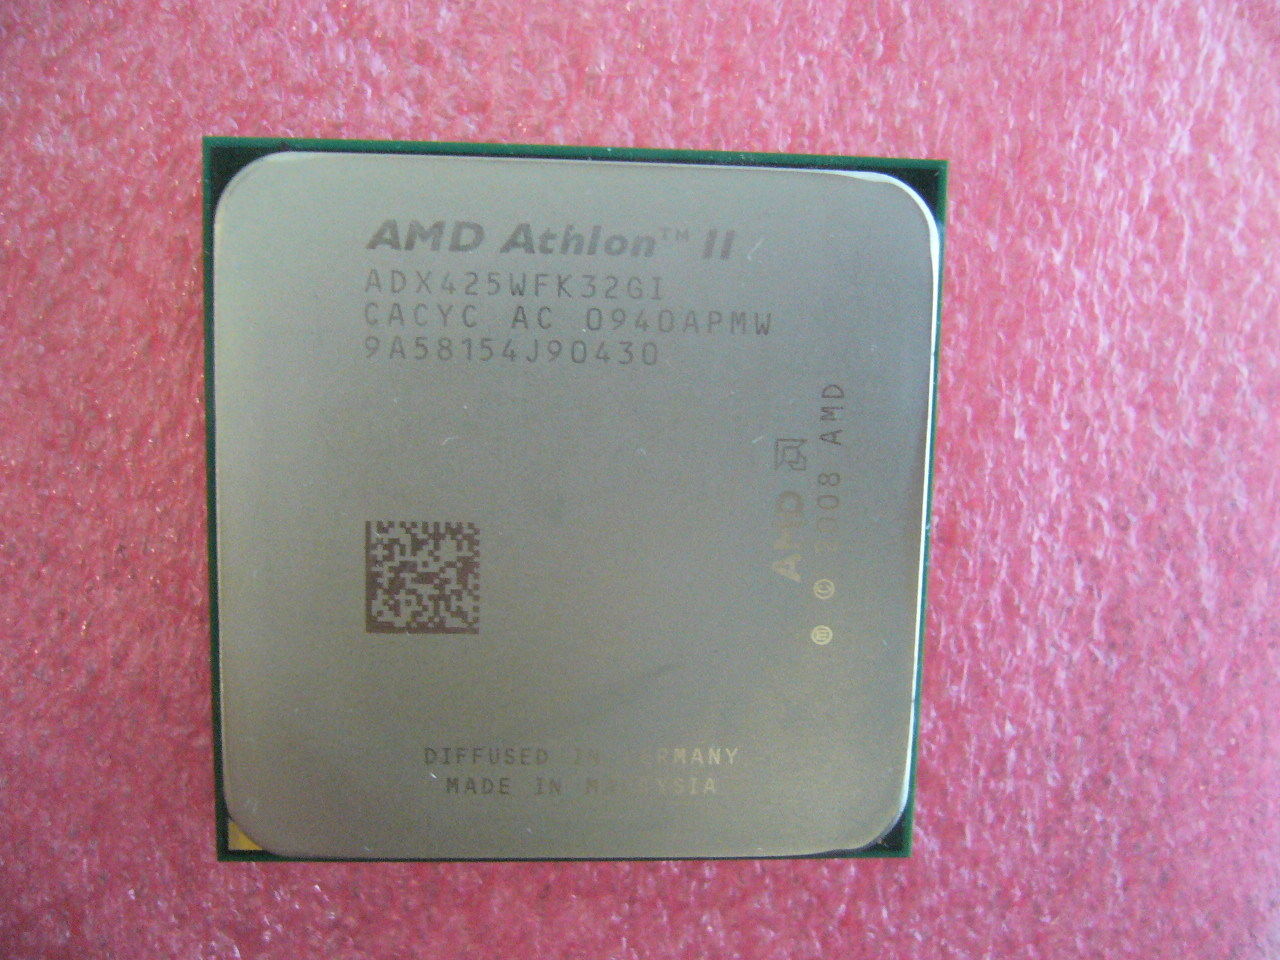 QTY 1x AMD Athlon II X3 425 2.7 GHz Triple-Core (ADX425WFK32GI) CPU AM3 938-Pin